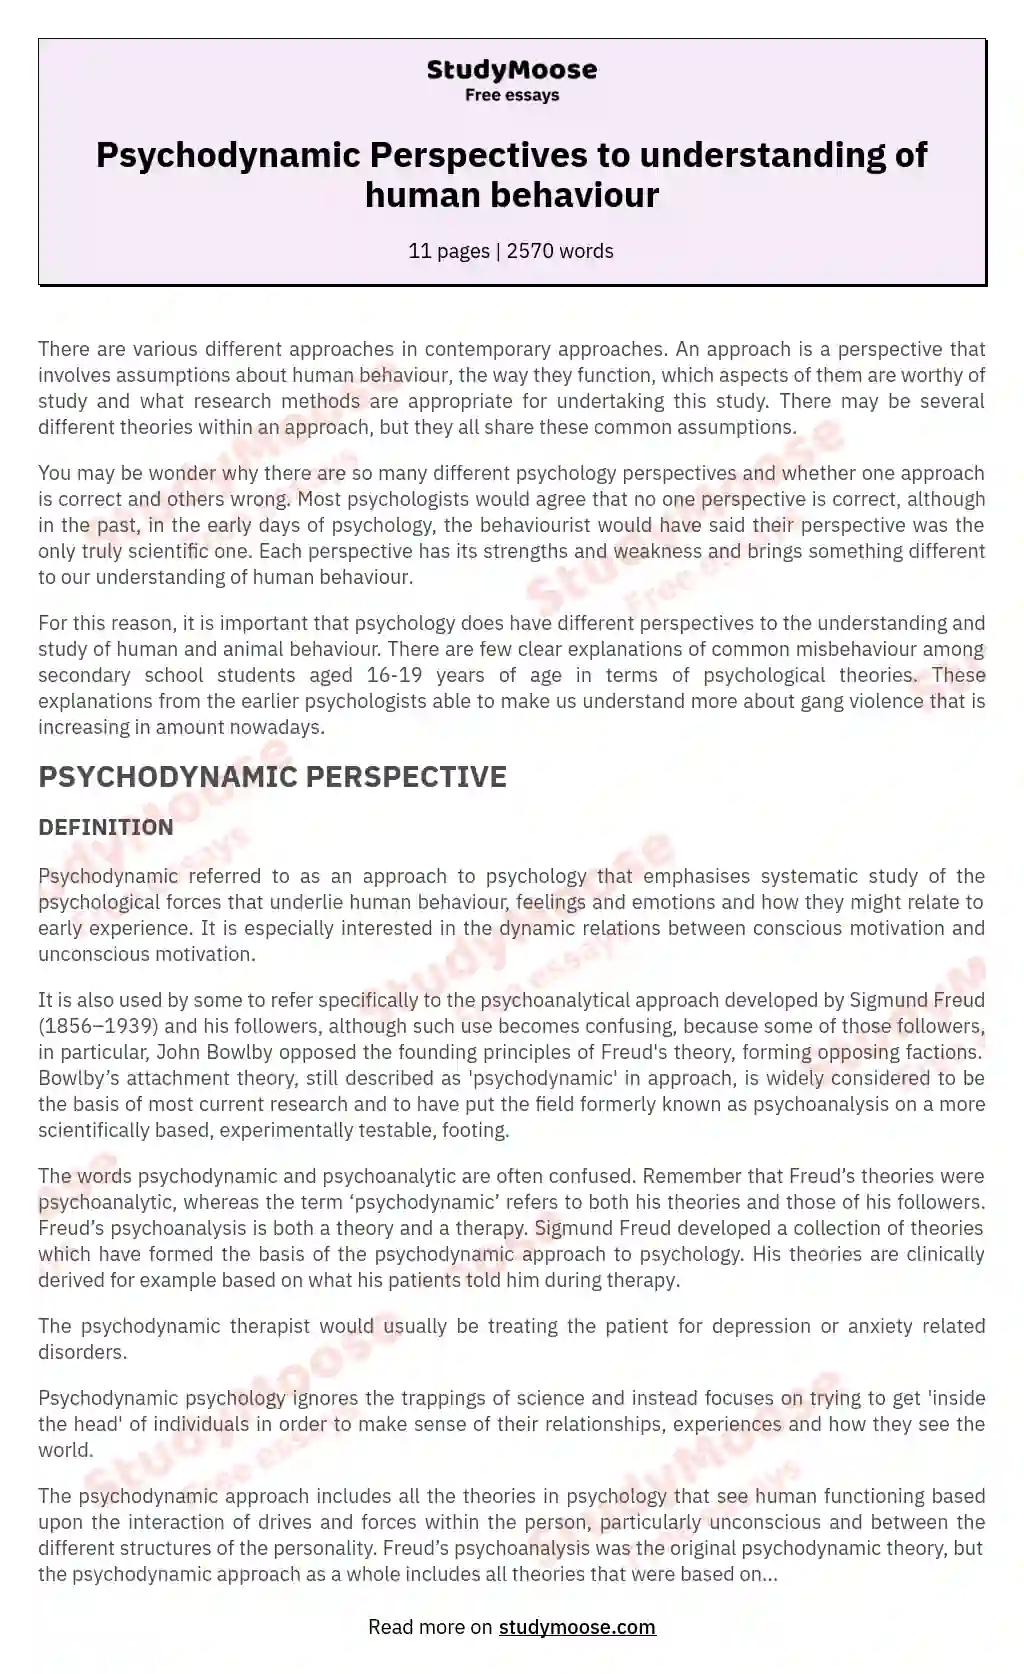 Psychodynamic Perspectives to understanding of human behaviour essay